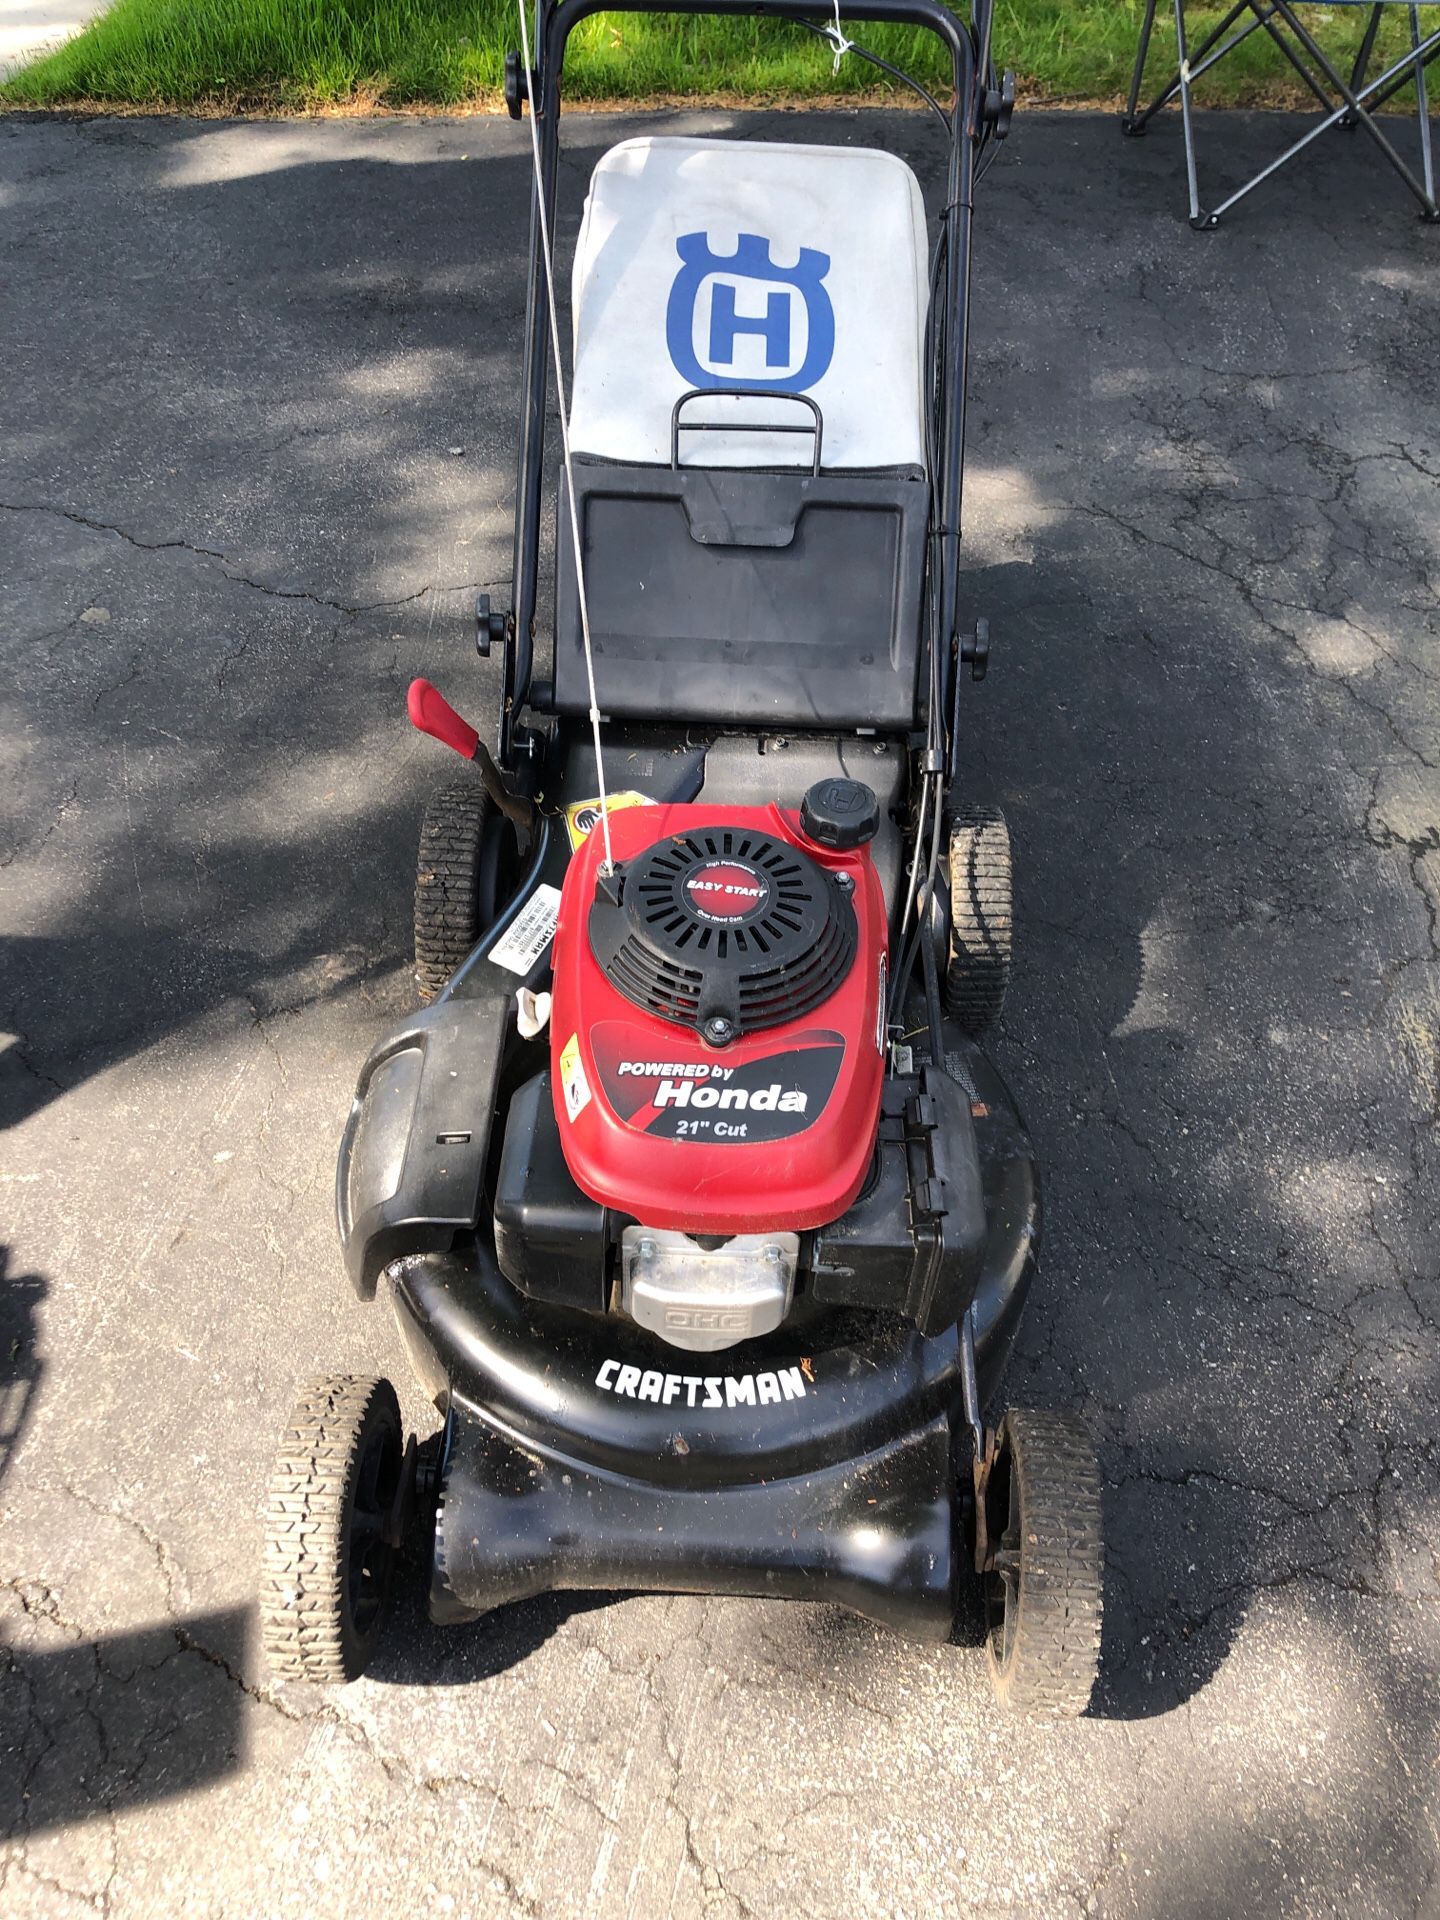 Craftsman lawn mower with Honda engine